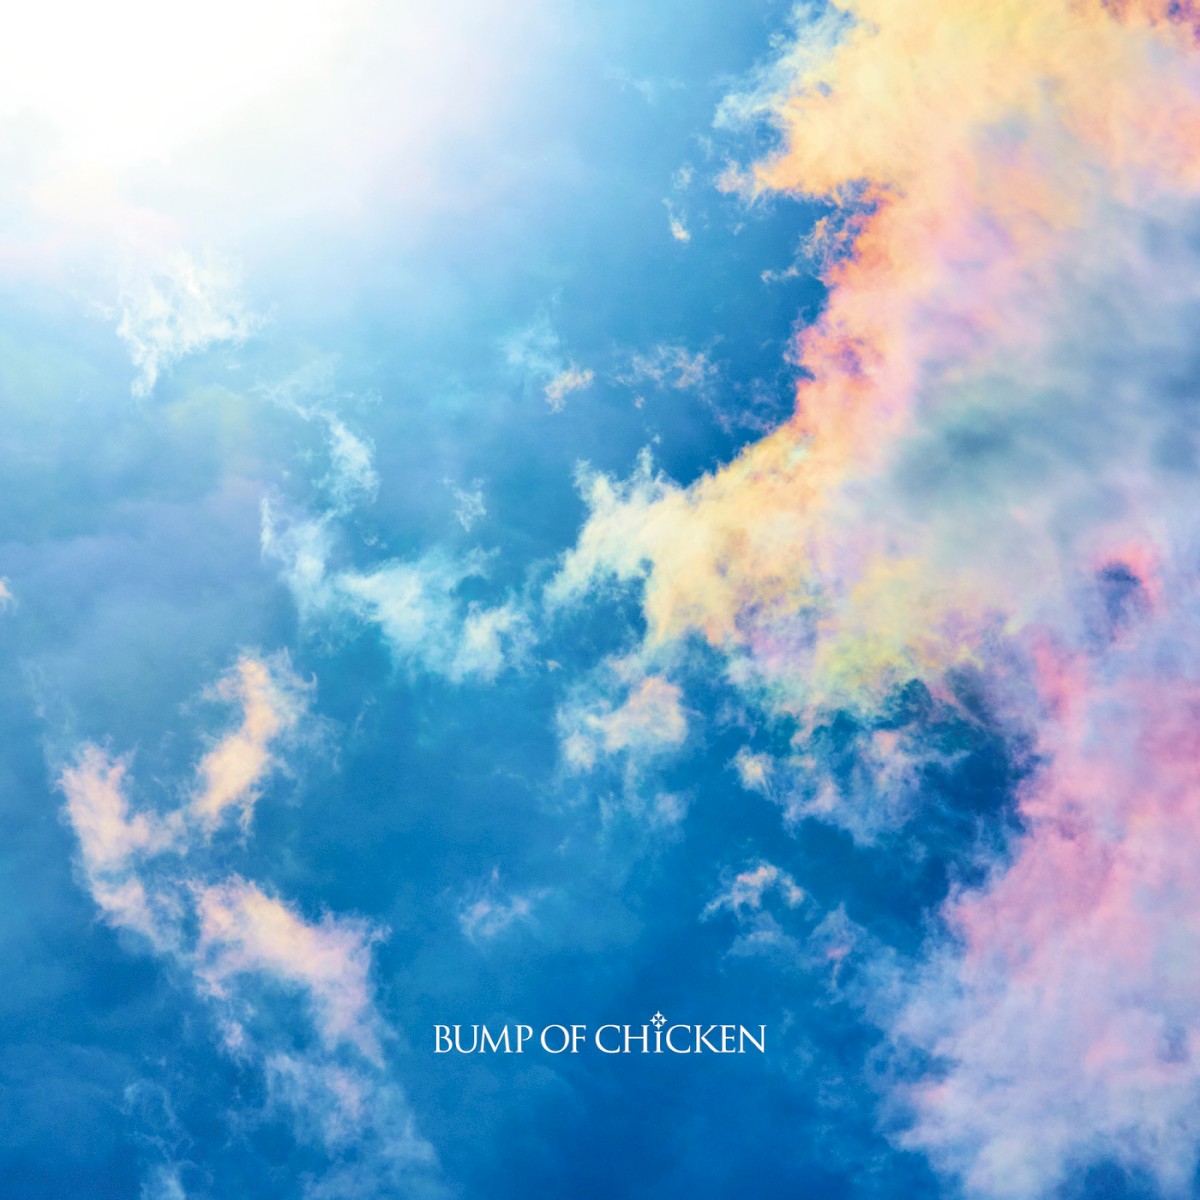 Release “なないろ” by BUMP OF CHICKEN - MusicBrainz